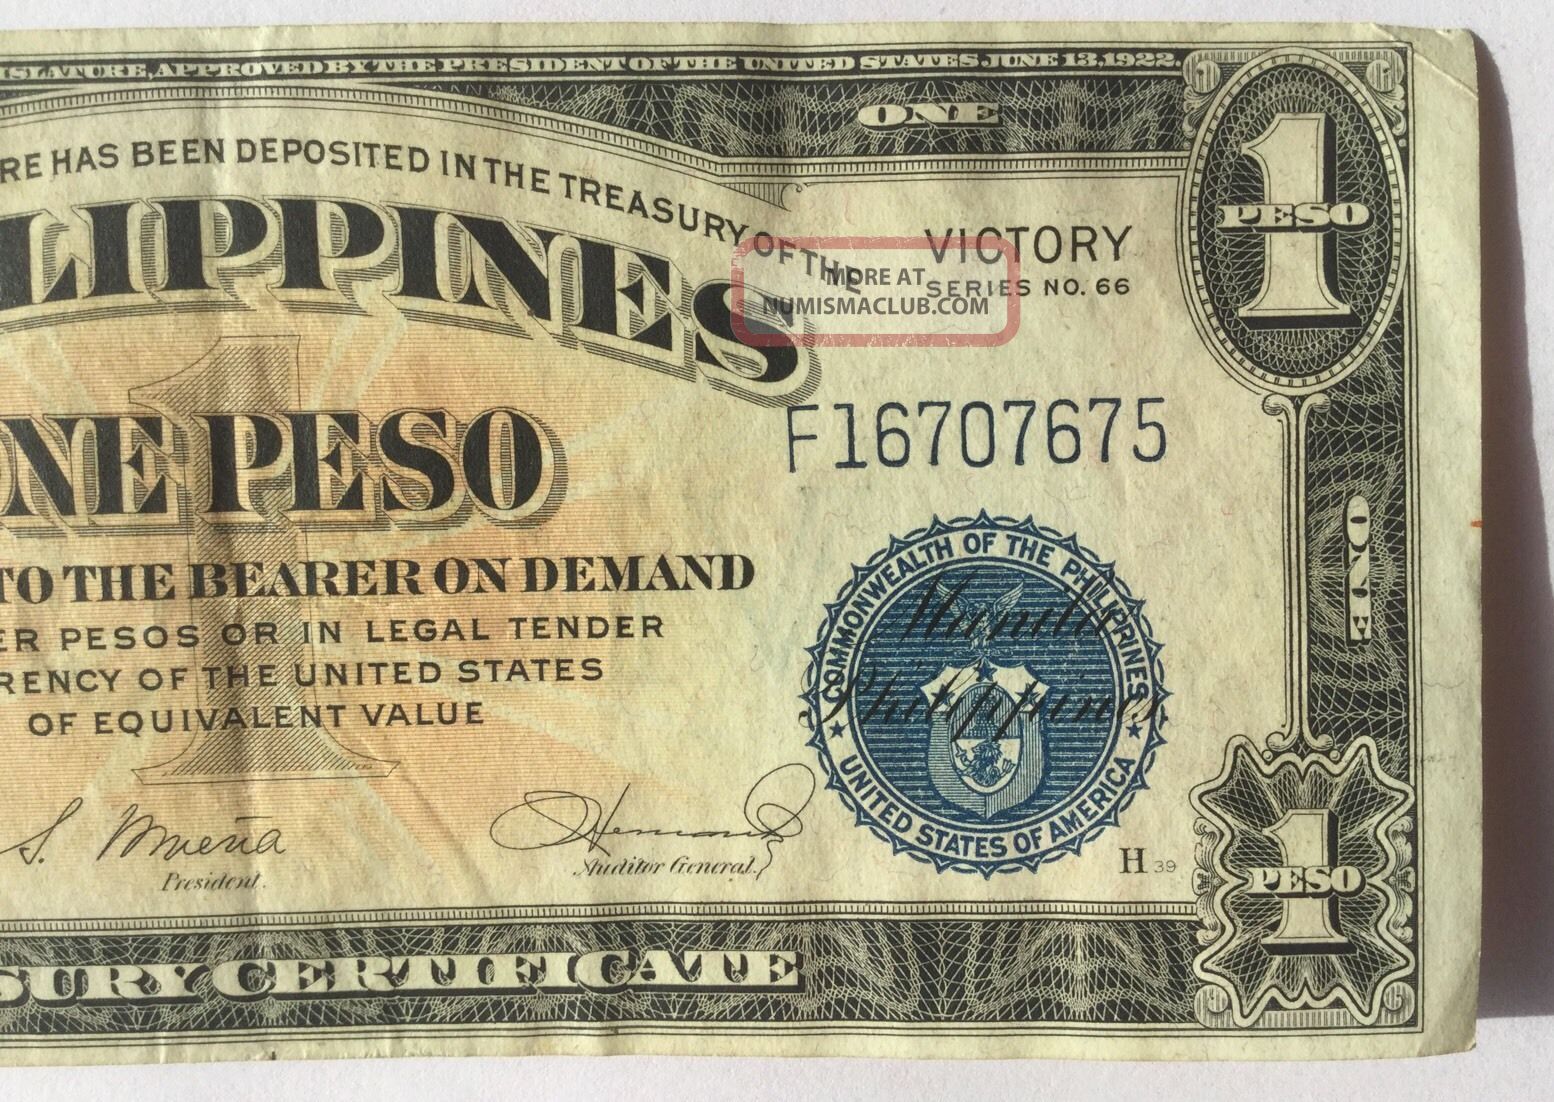 United States Philippines One Peso Treasury Victory Series No 66 Dollar